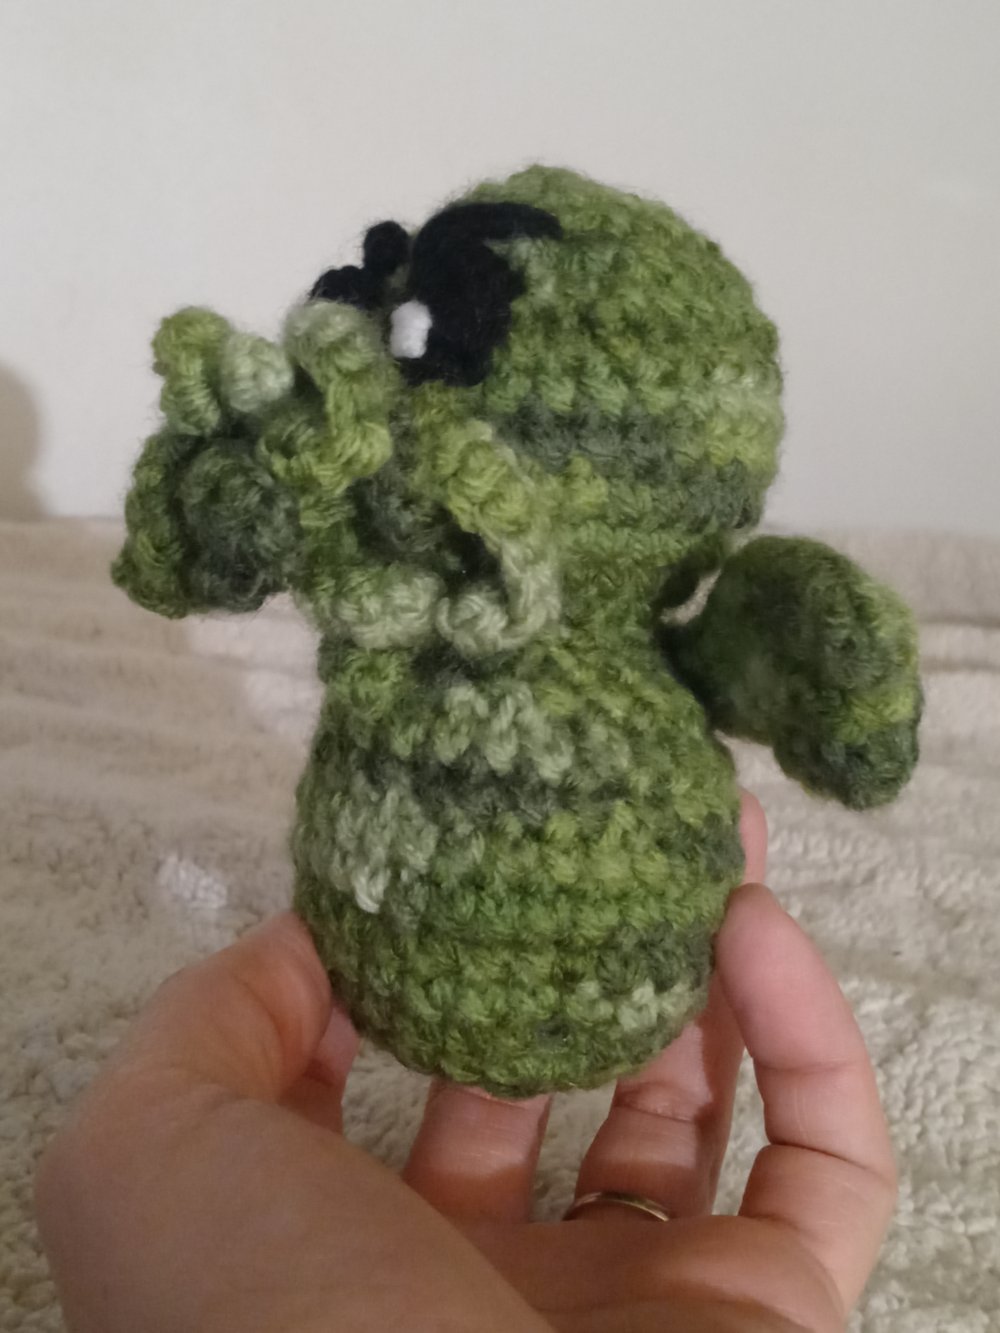 Cthulhu Crochet Creature - Green Small